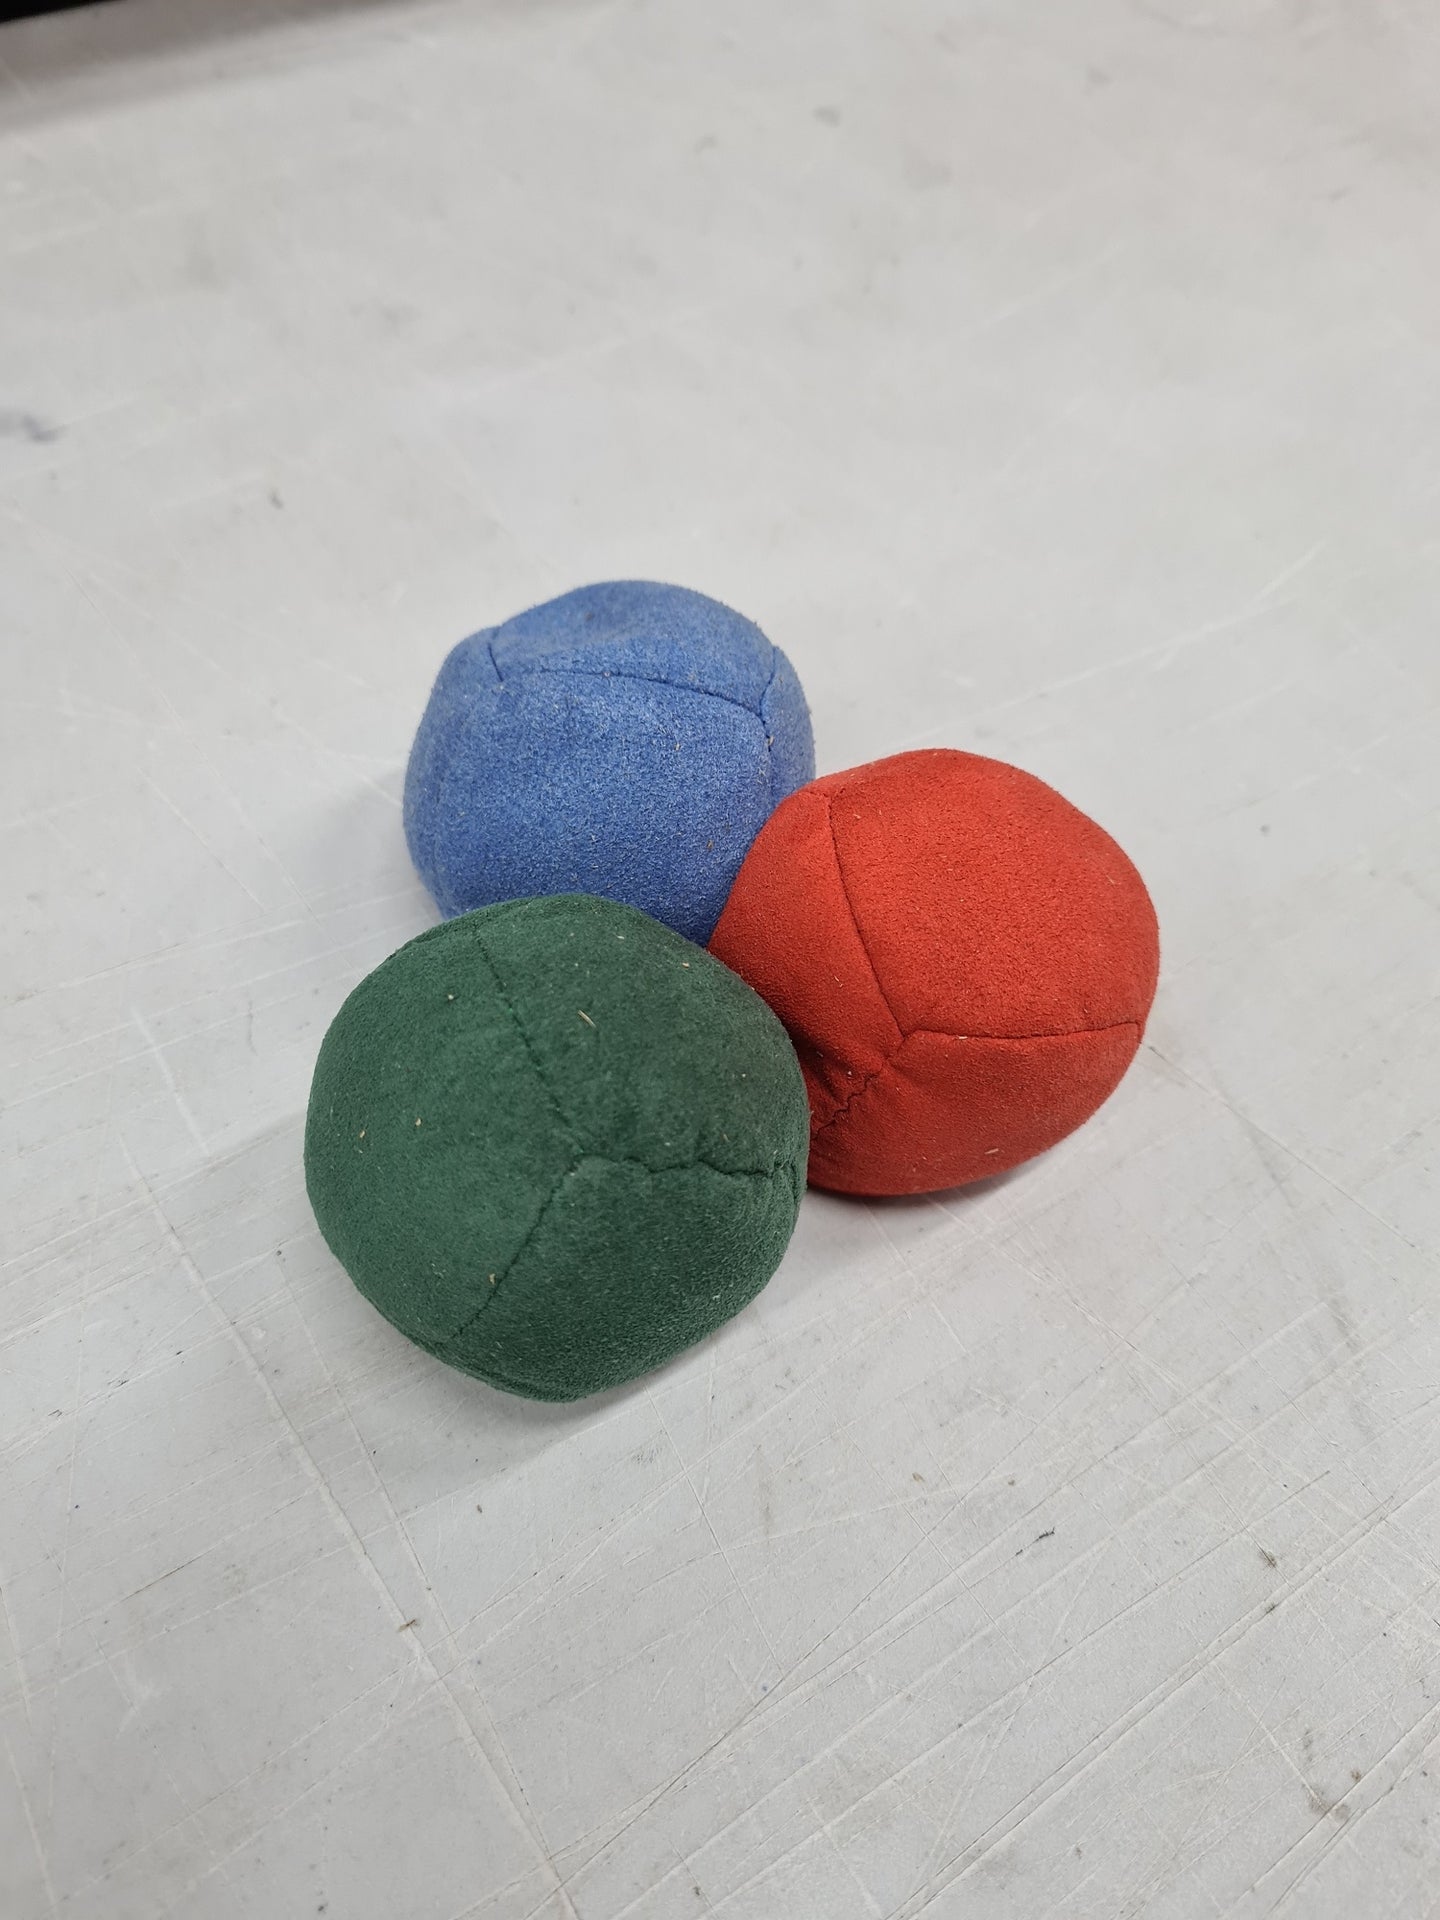 Juggle Dream Mini Uglies Juggling Balls - Mixed Set of 3 - Bargain basement - RRP £13.50